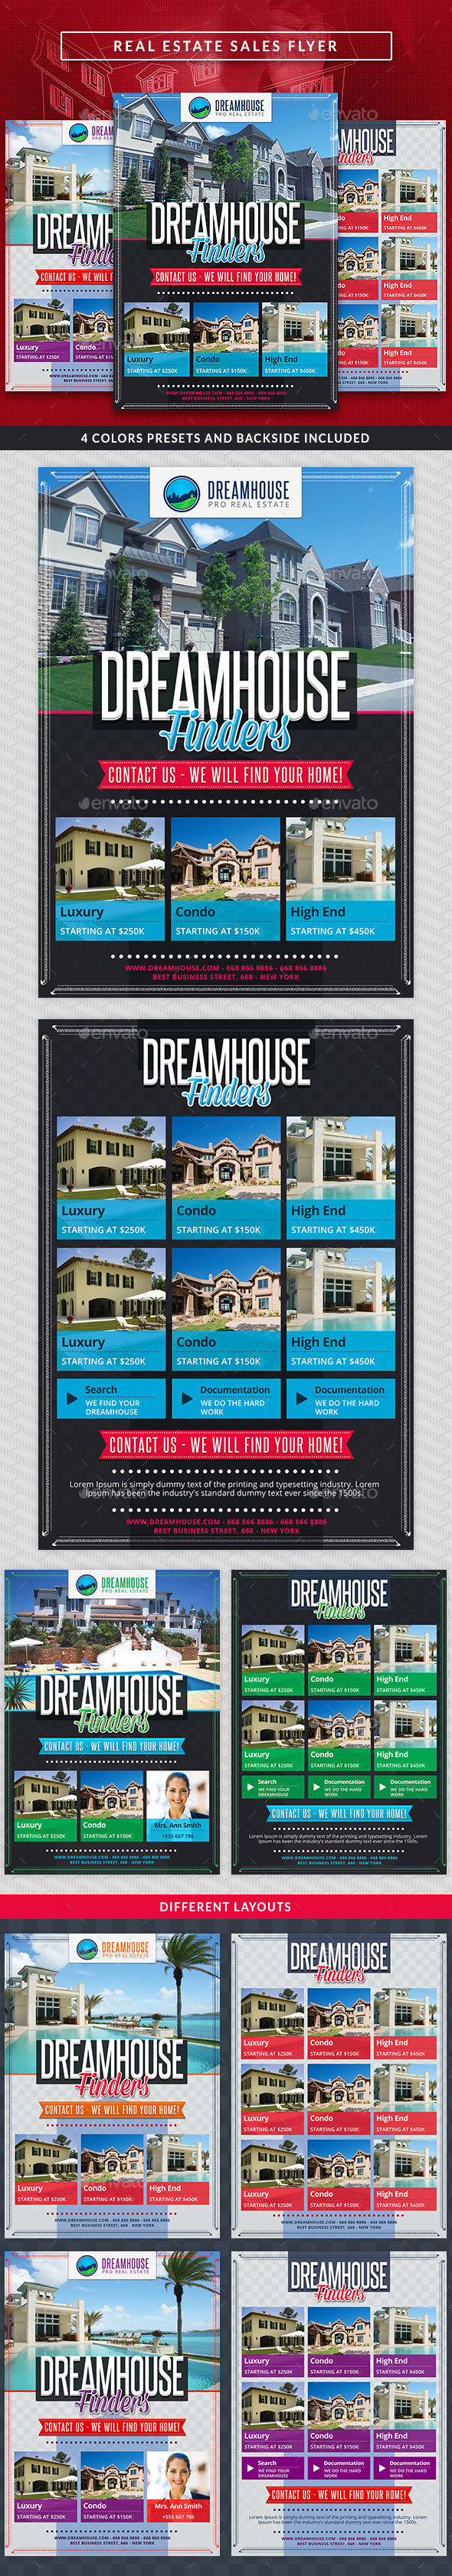 Real estate sales flyer showcase